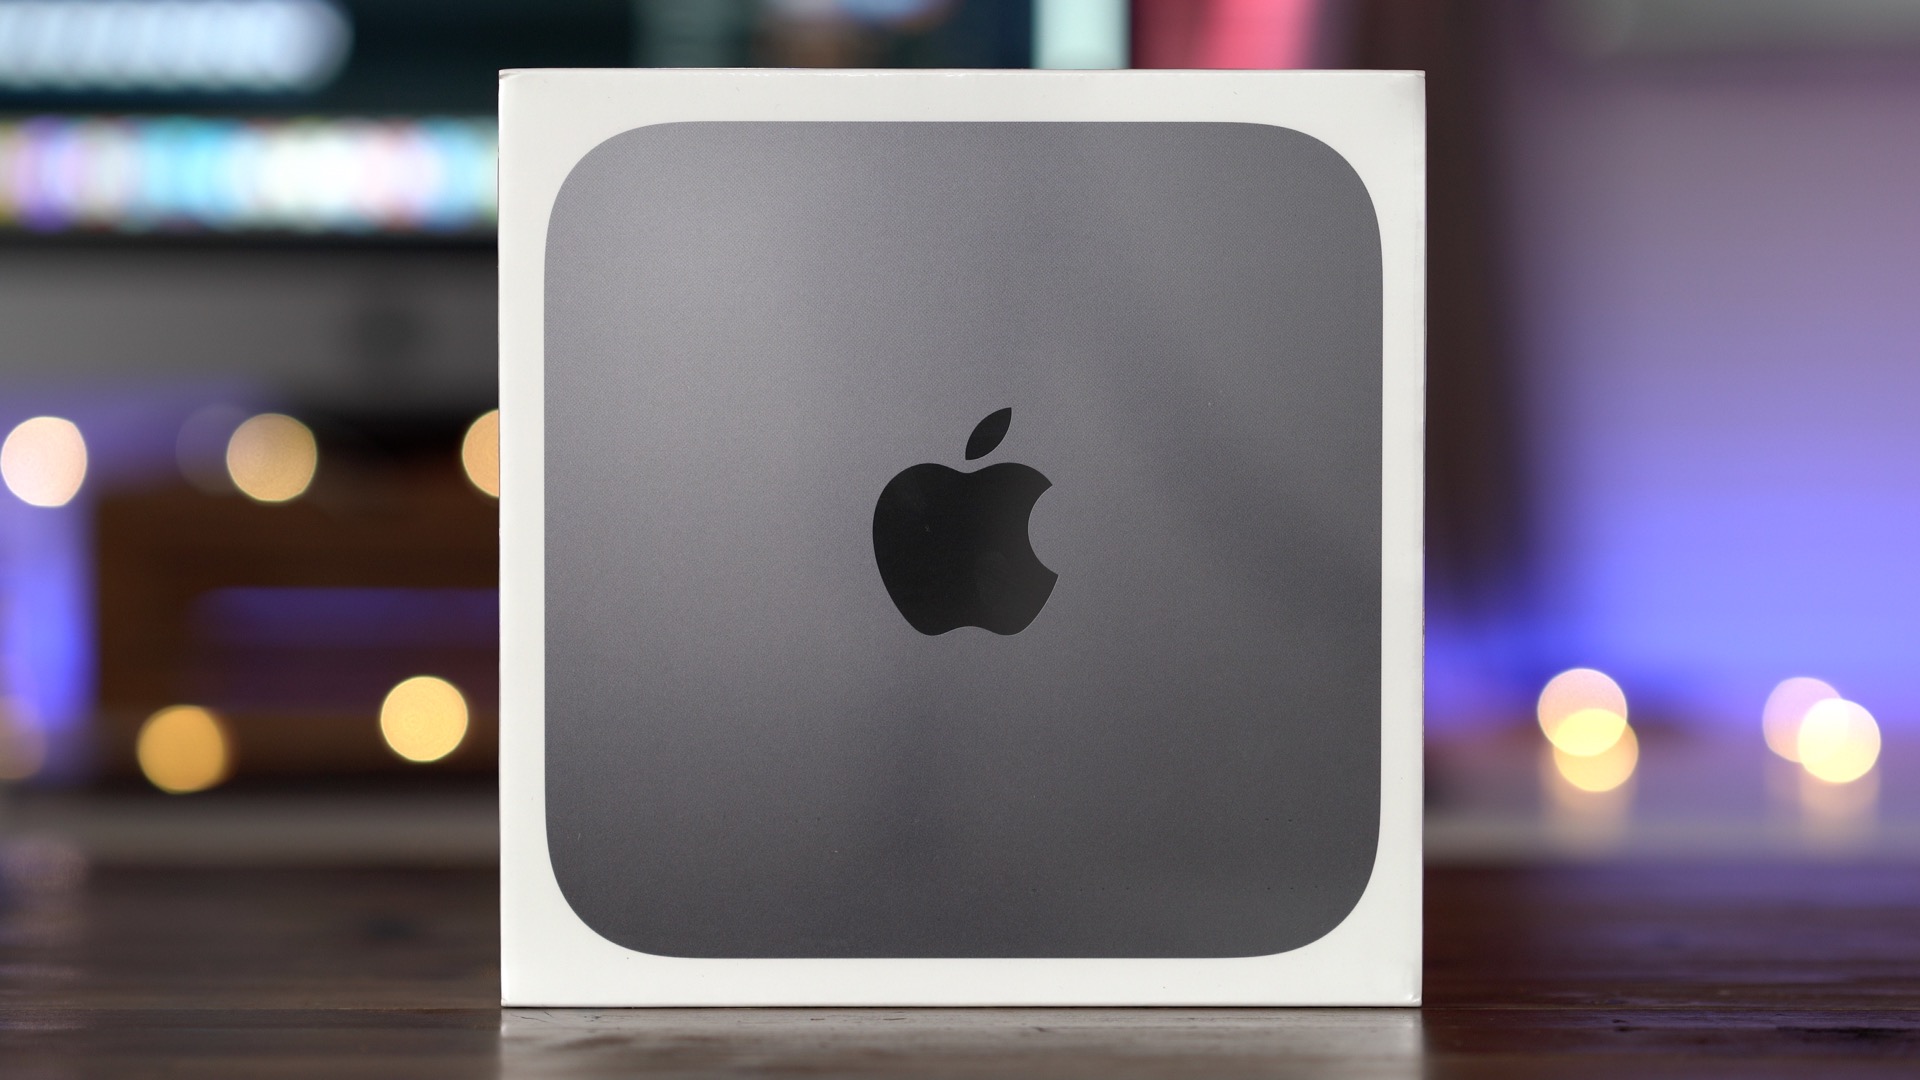 Mac mini 2018 review: Apple's most versatile new Mac [Video] - 9to5Mac